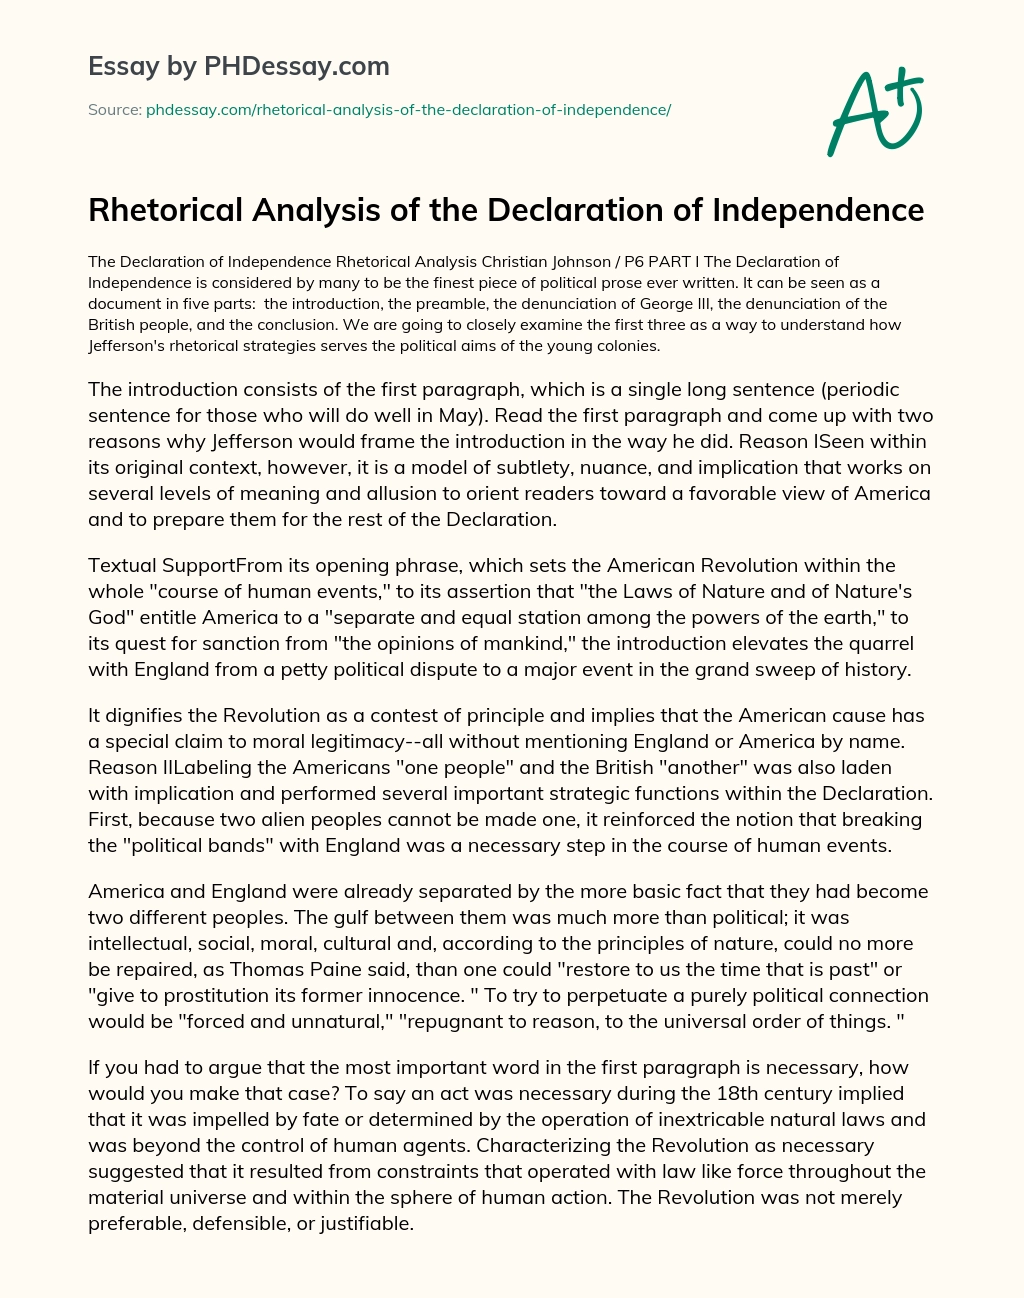 Rhetorical Analysis of the Declaration of Independence essay